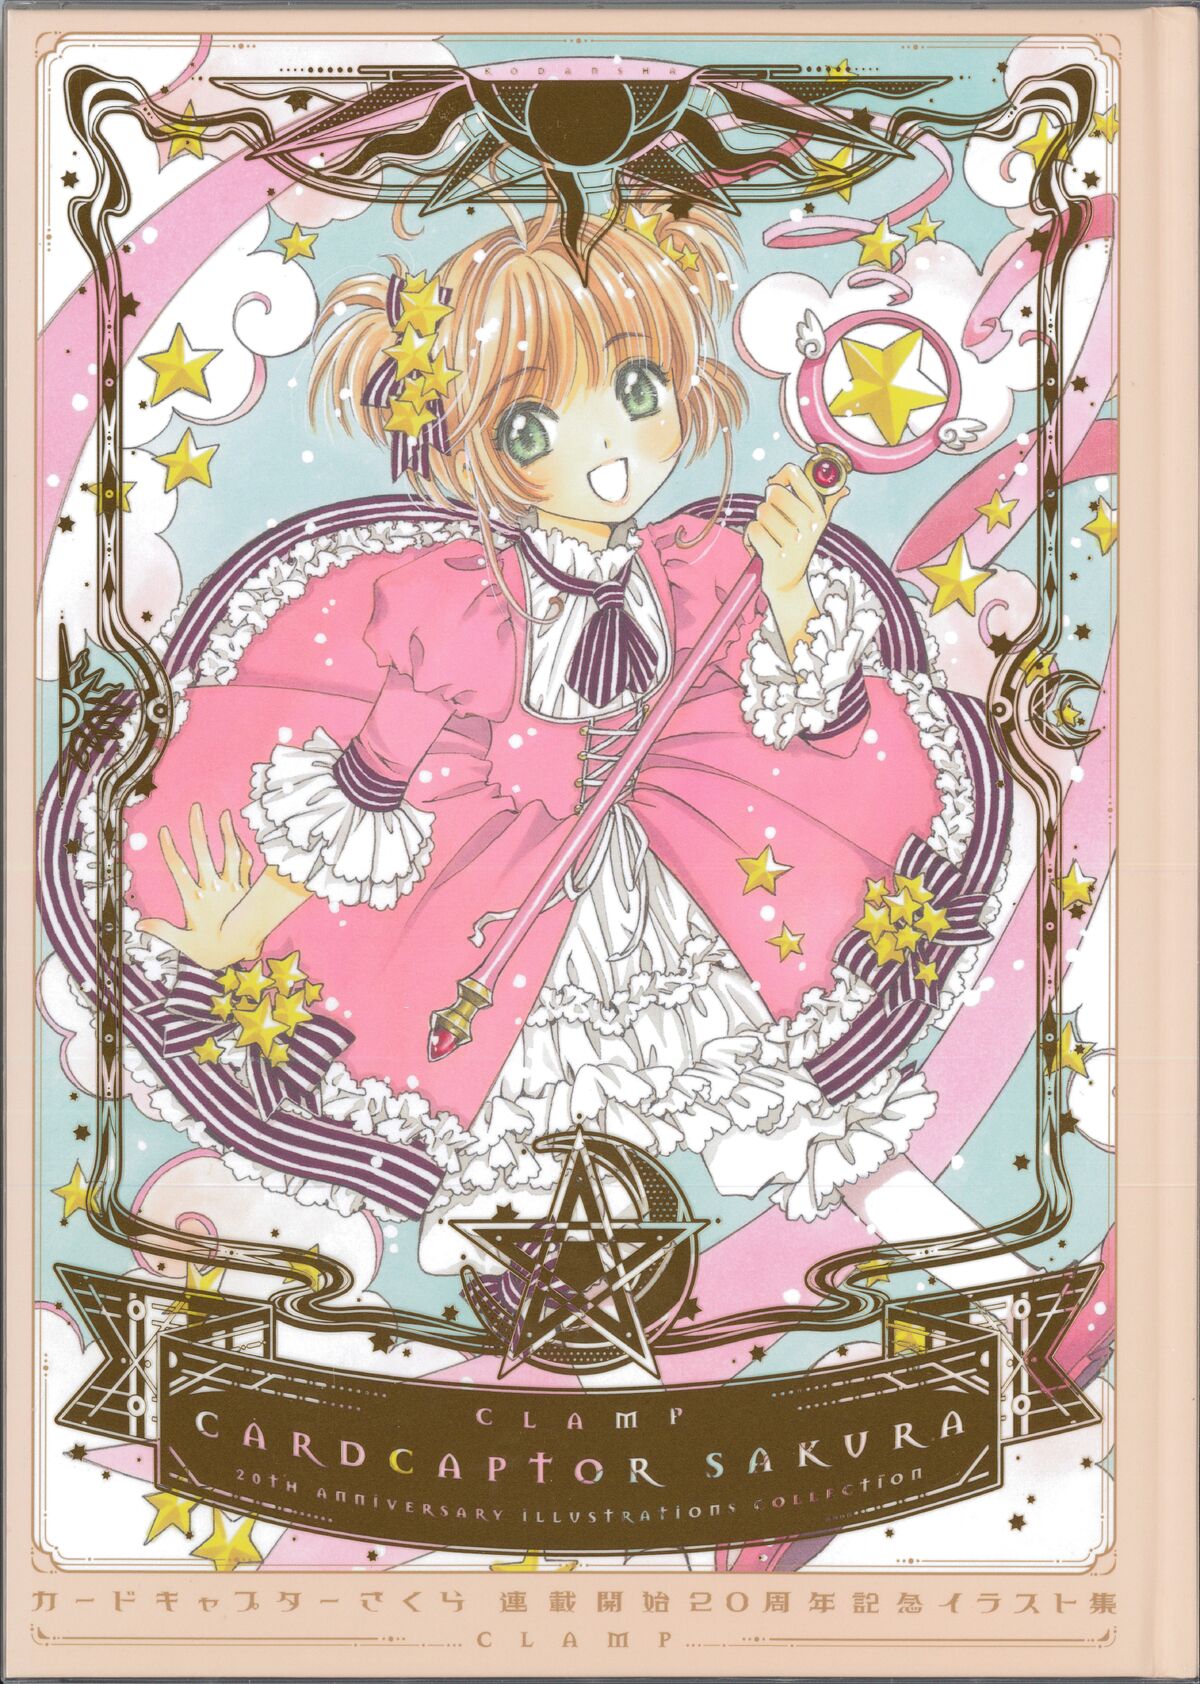 Cardcaptor Sakura th Anniversary Illustration Collection Artbook Cardcaptor Sakura Wiki Fandom